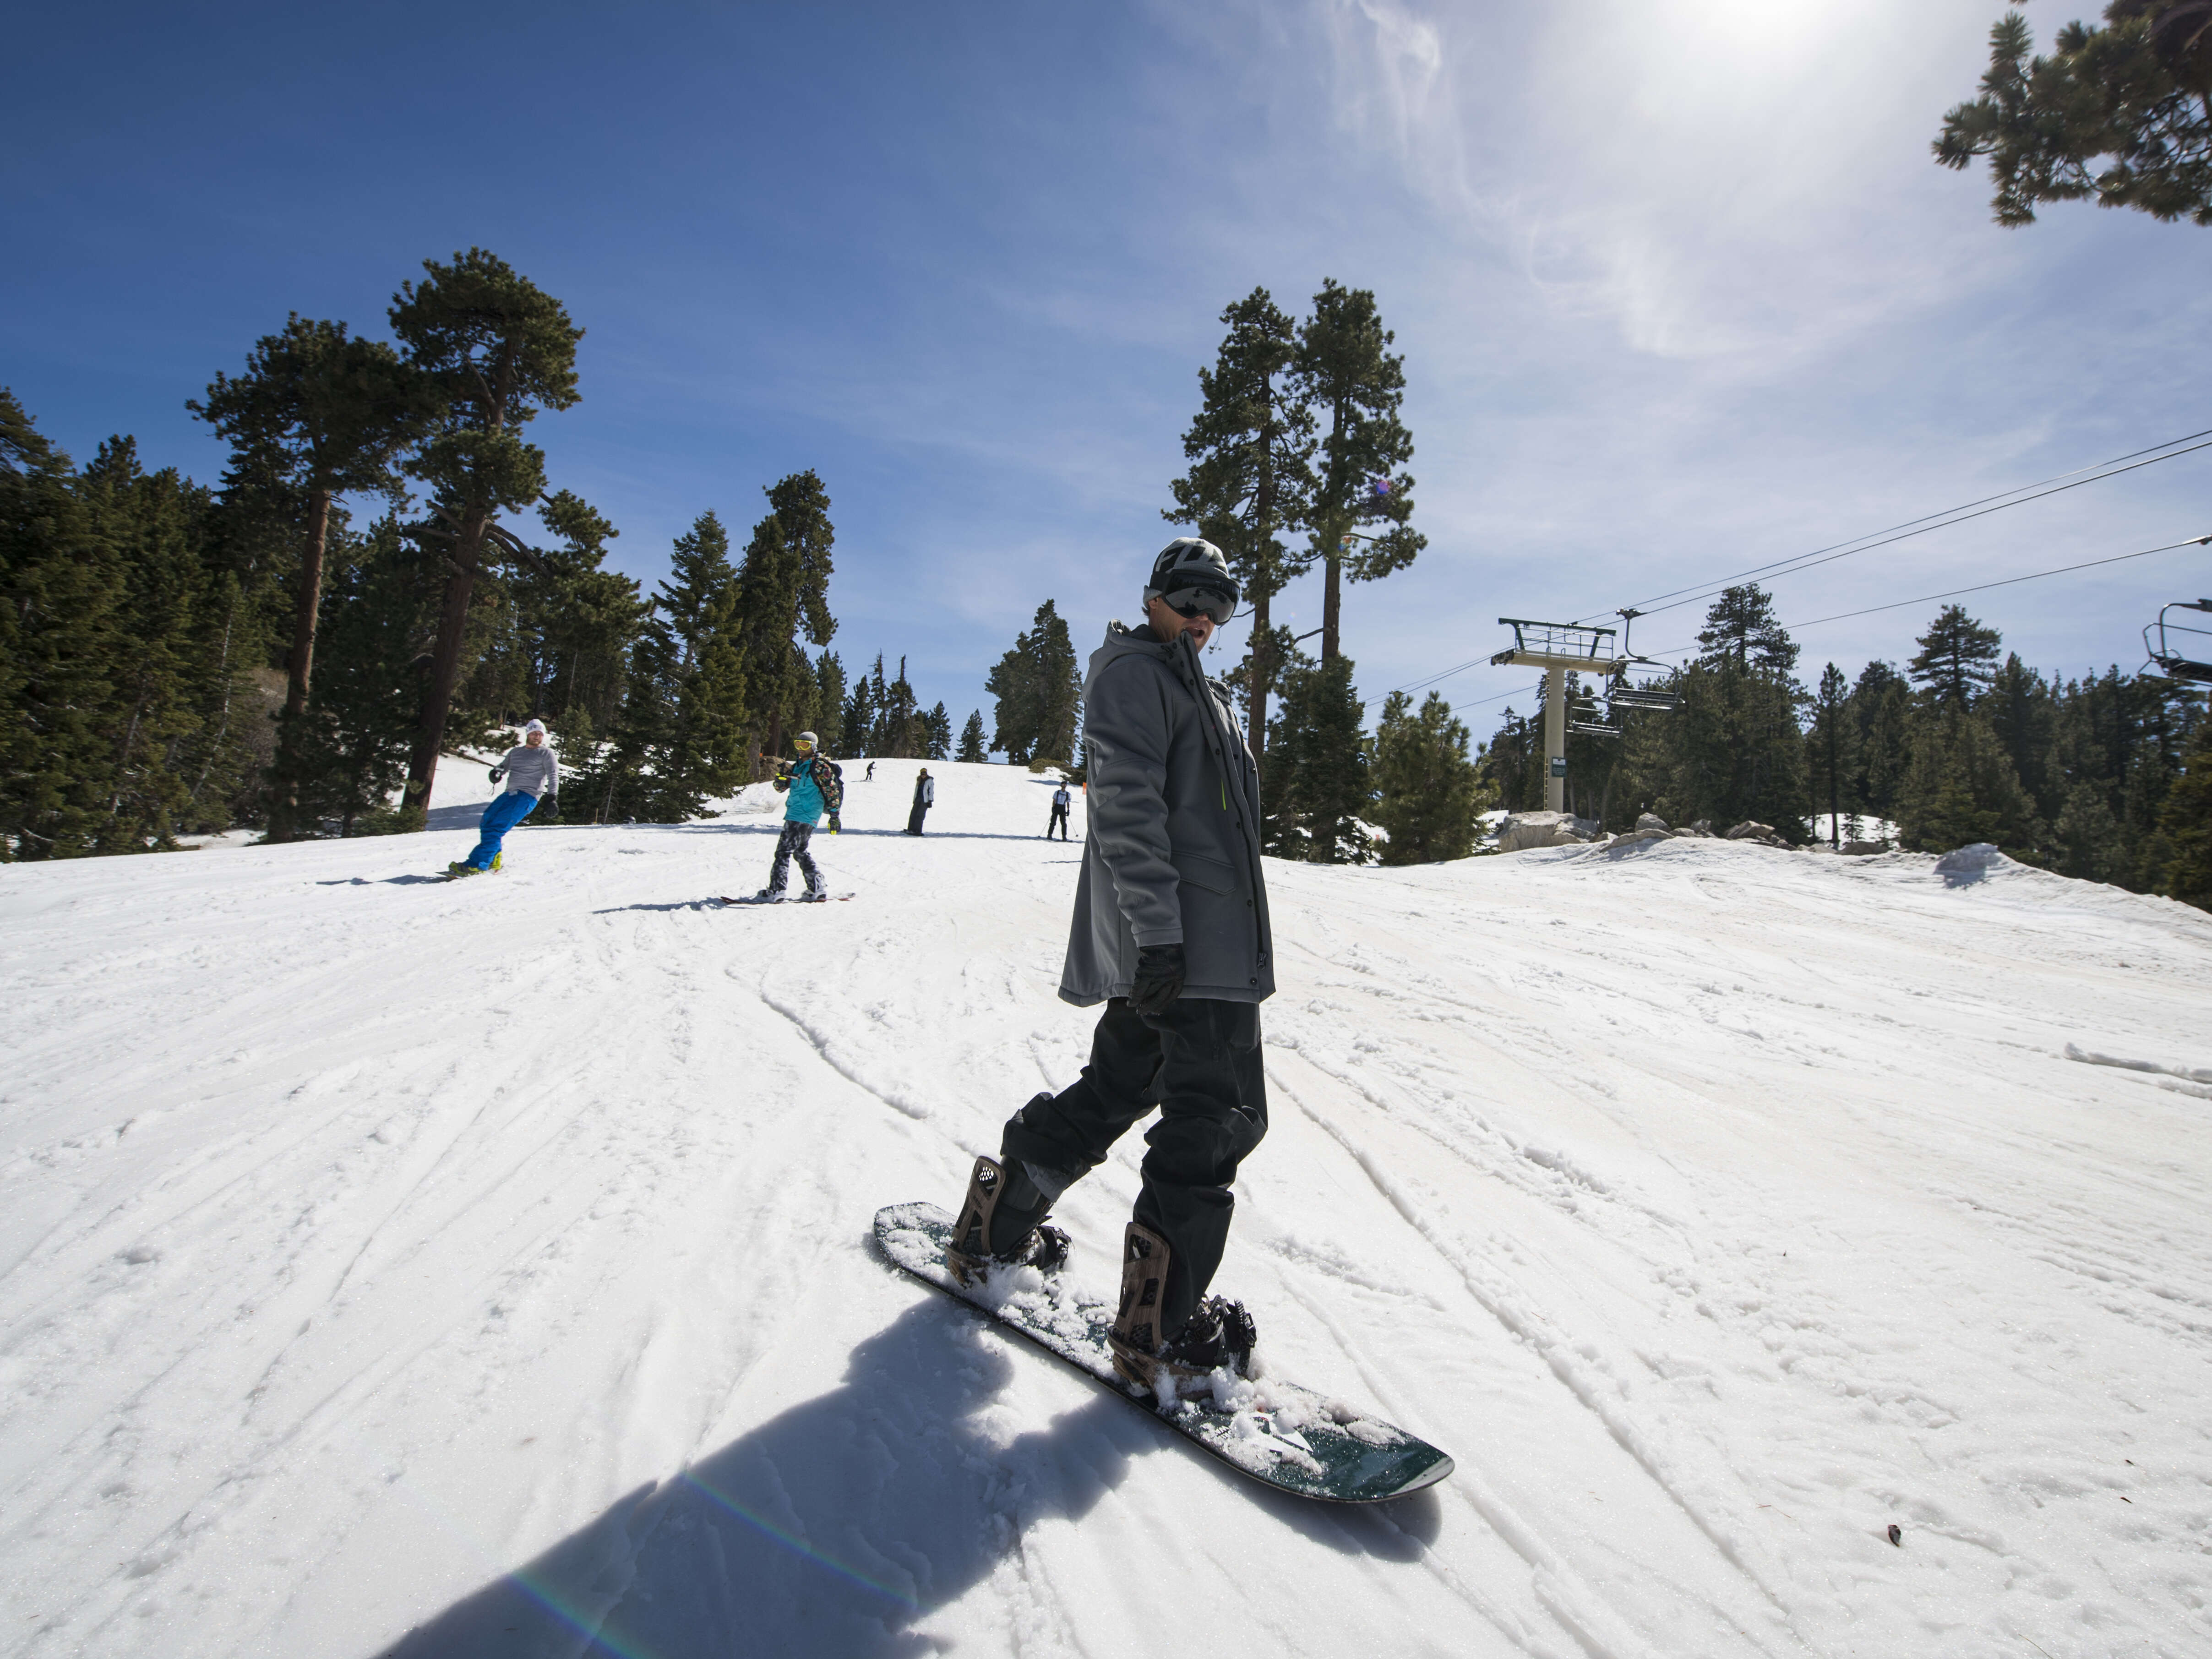 snowboarding, snow, mountain, winter sports